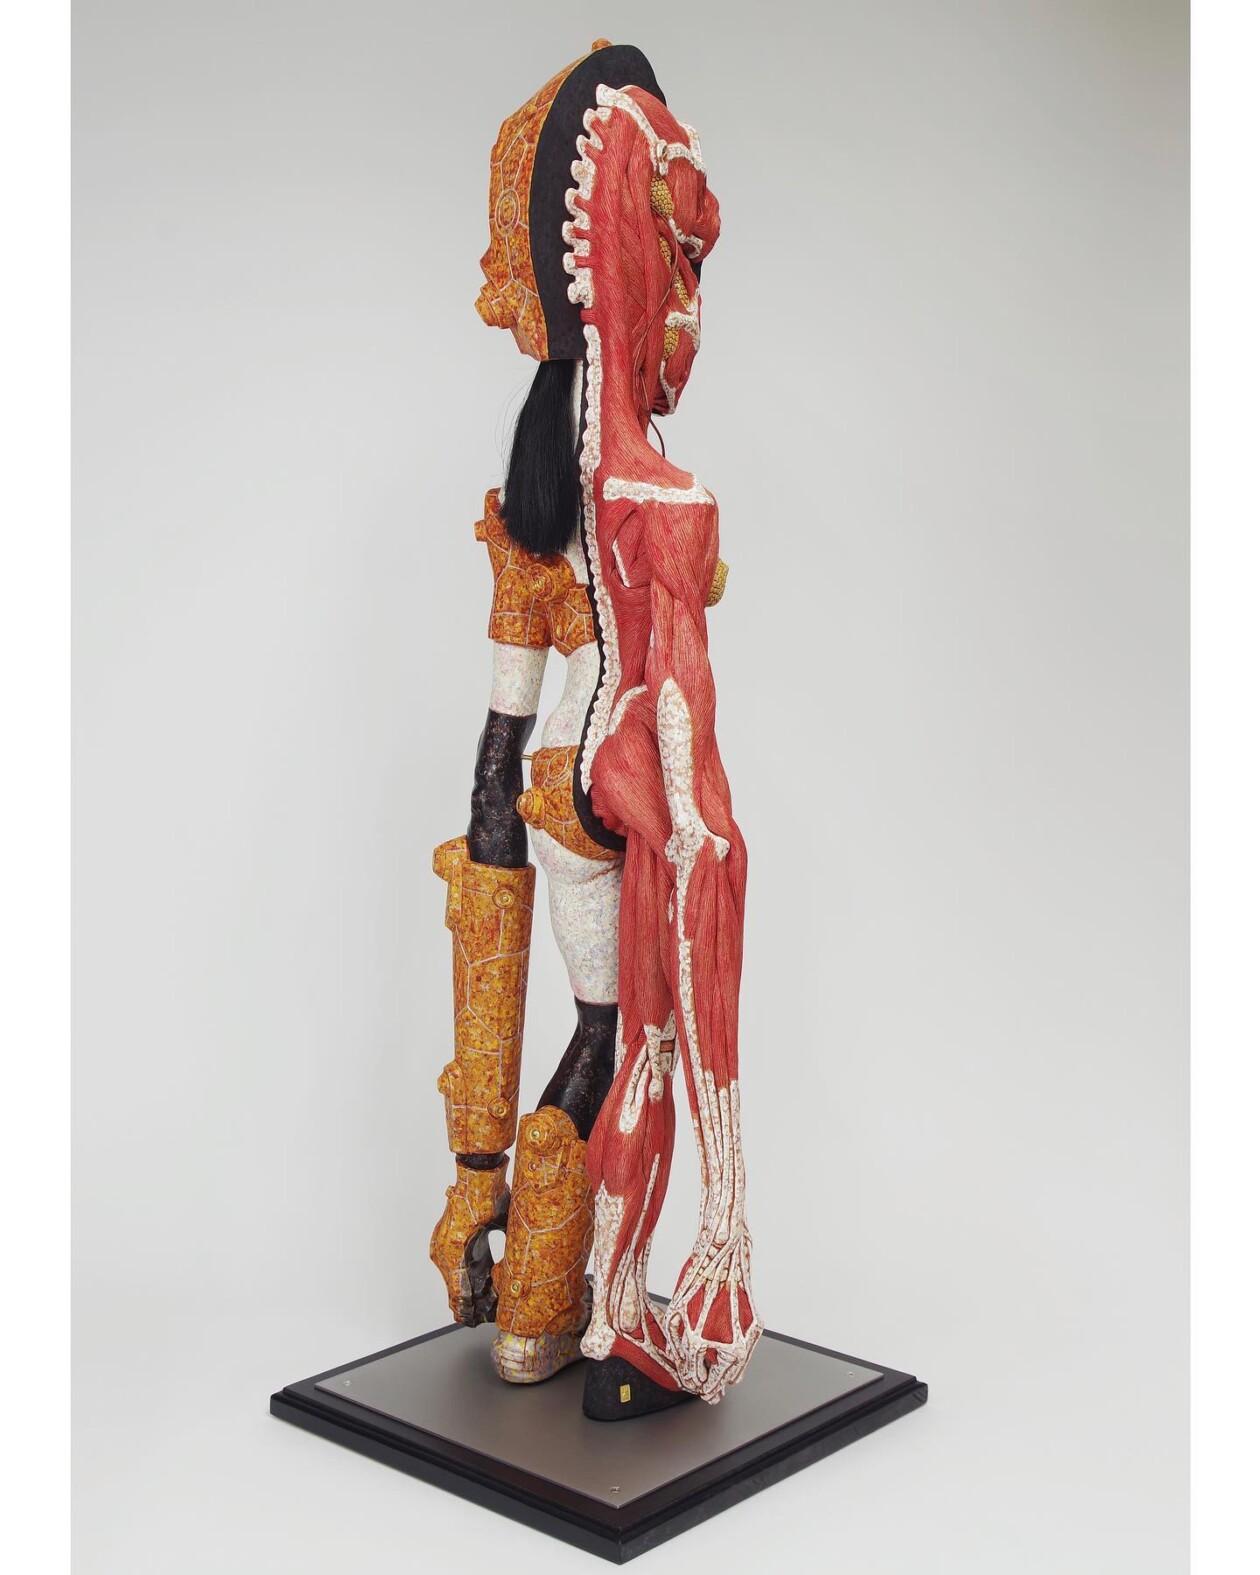 Masao Kinoshita’s Sculptures Explore Myth, Religion, And The Human Form (15)